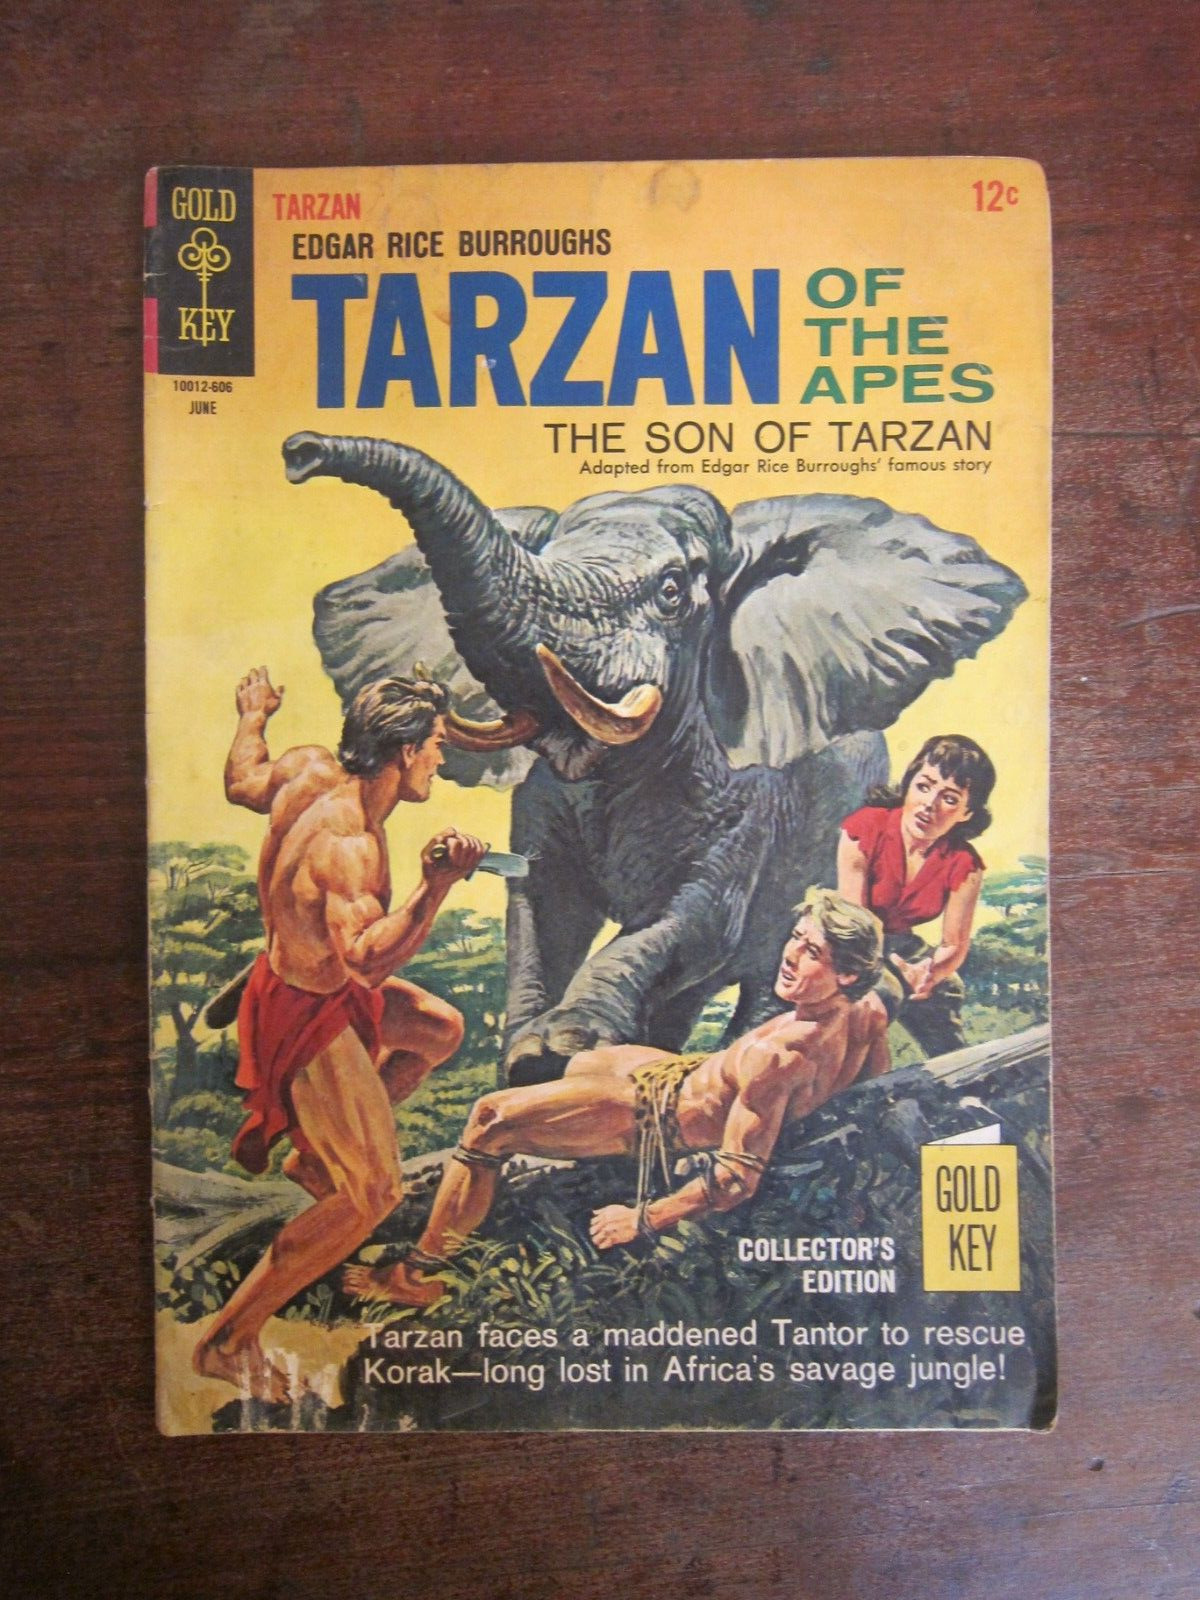 Tarzan of the Apes #158 - Edgar Rice Burroughs character - Gold Key - Silver Age